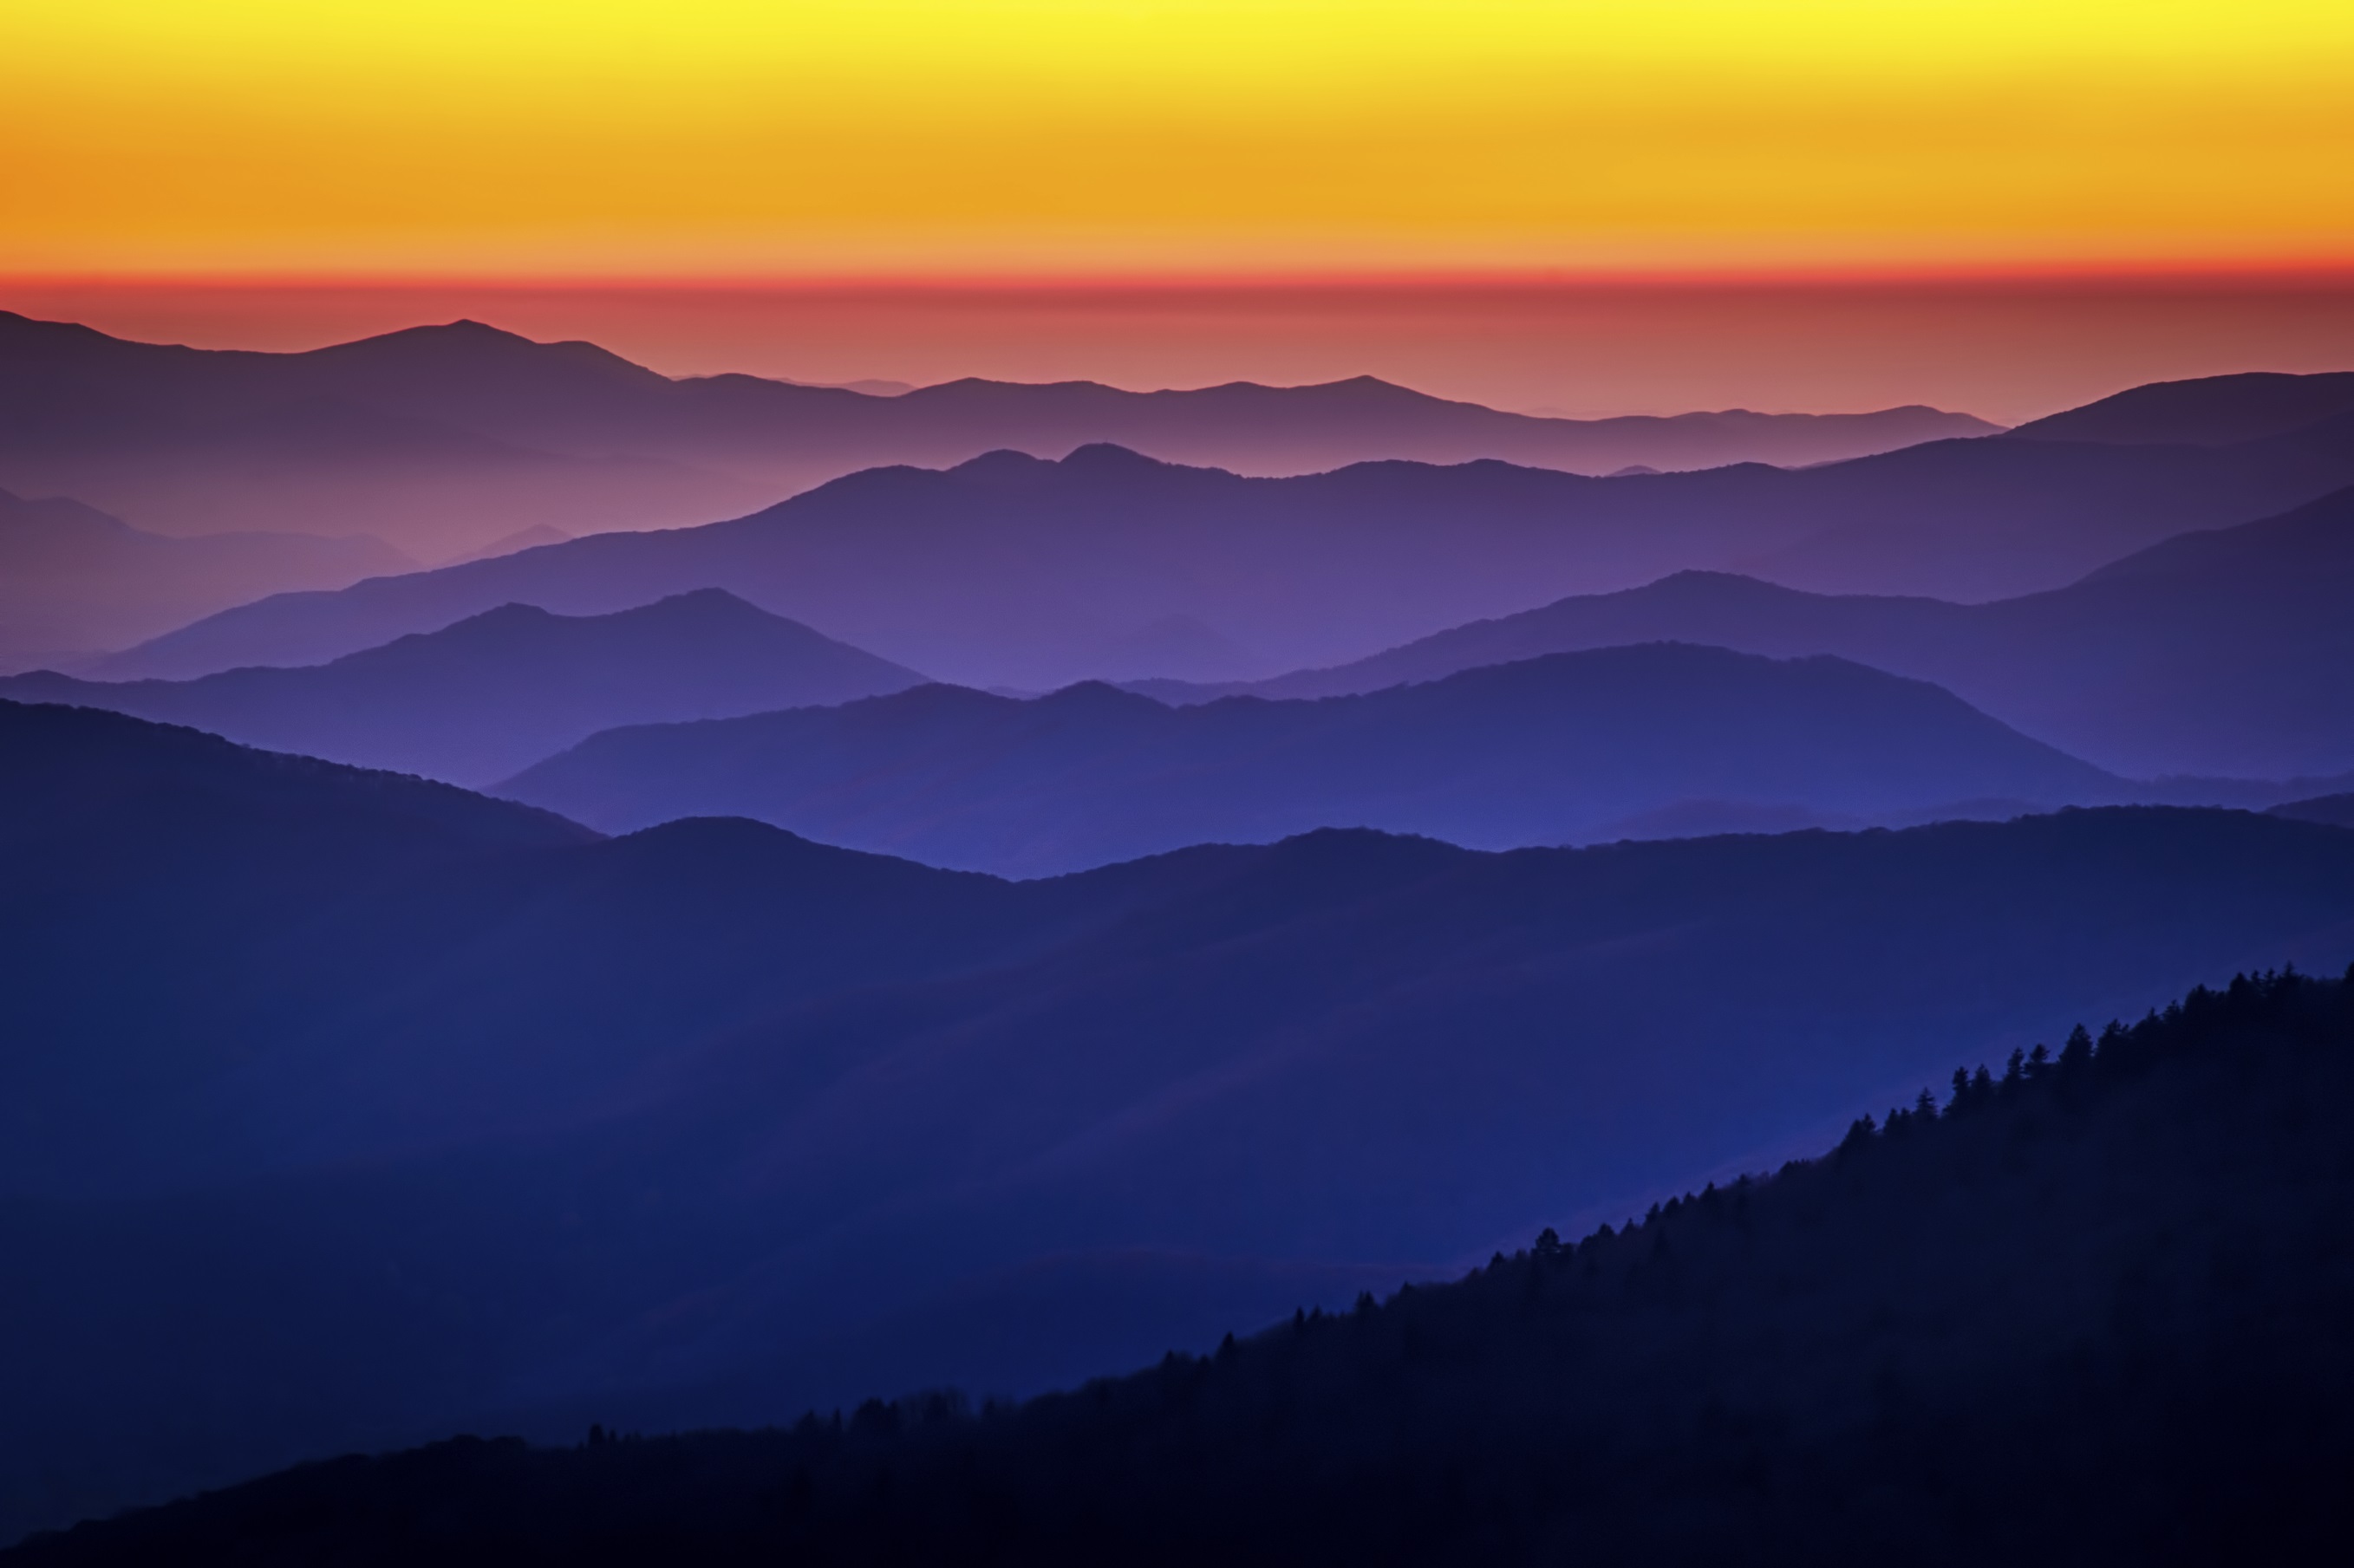 Smoky Mountains National Park